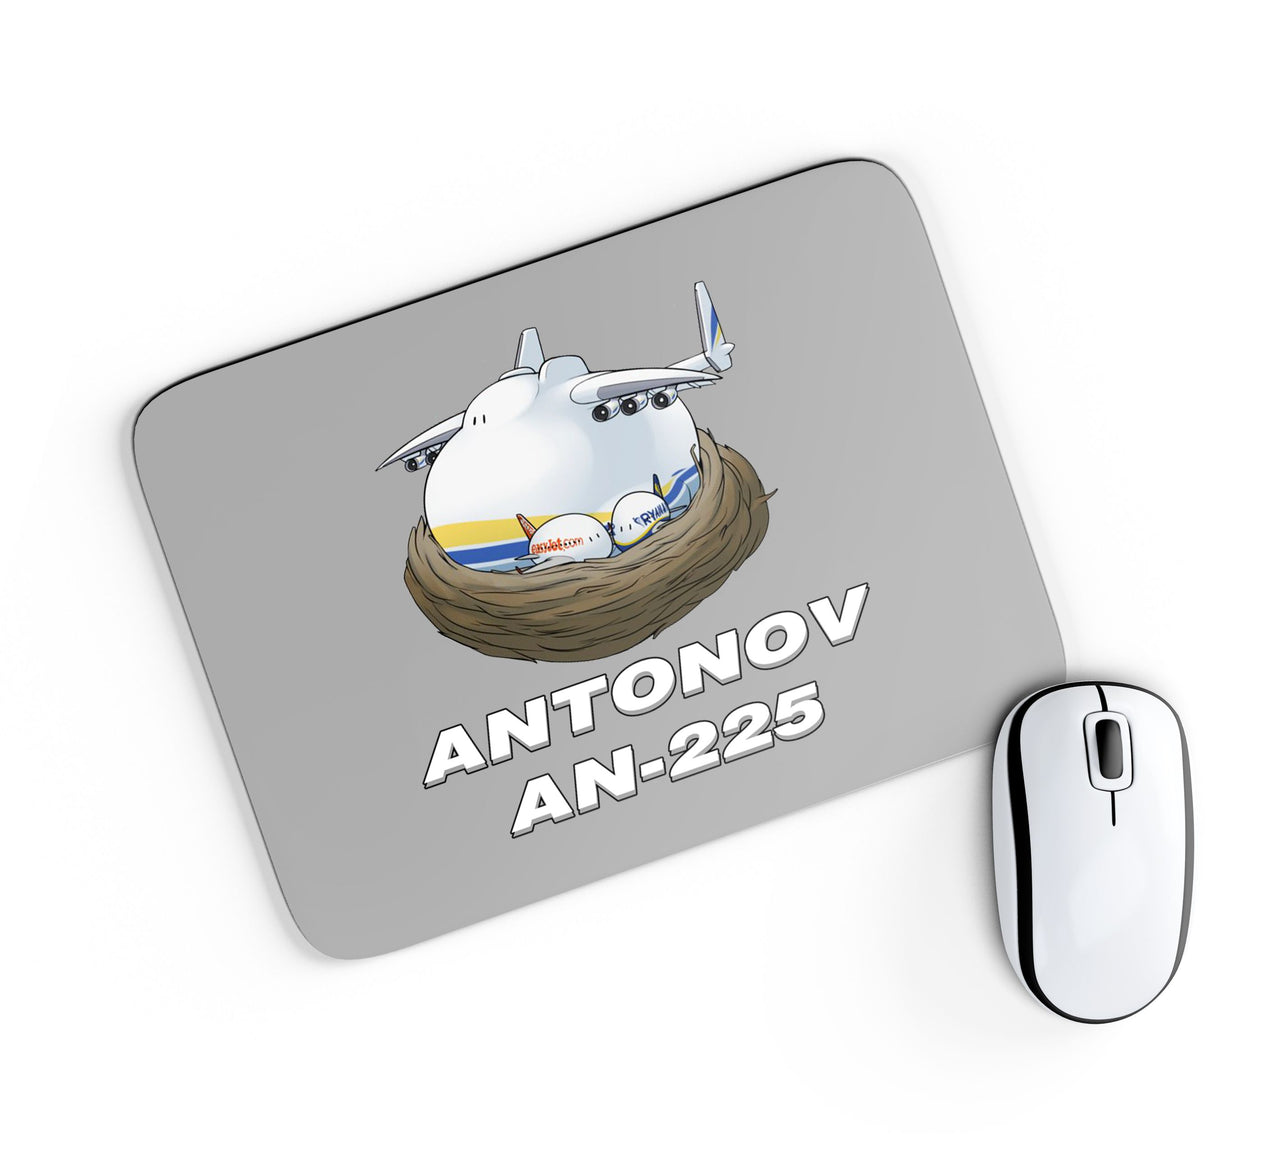 Antonov AN-225 (22) Designed Mouse Pads